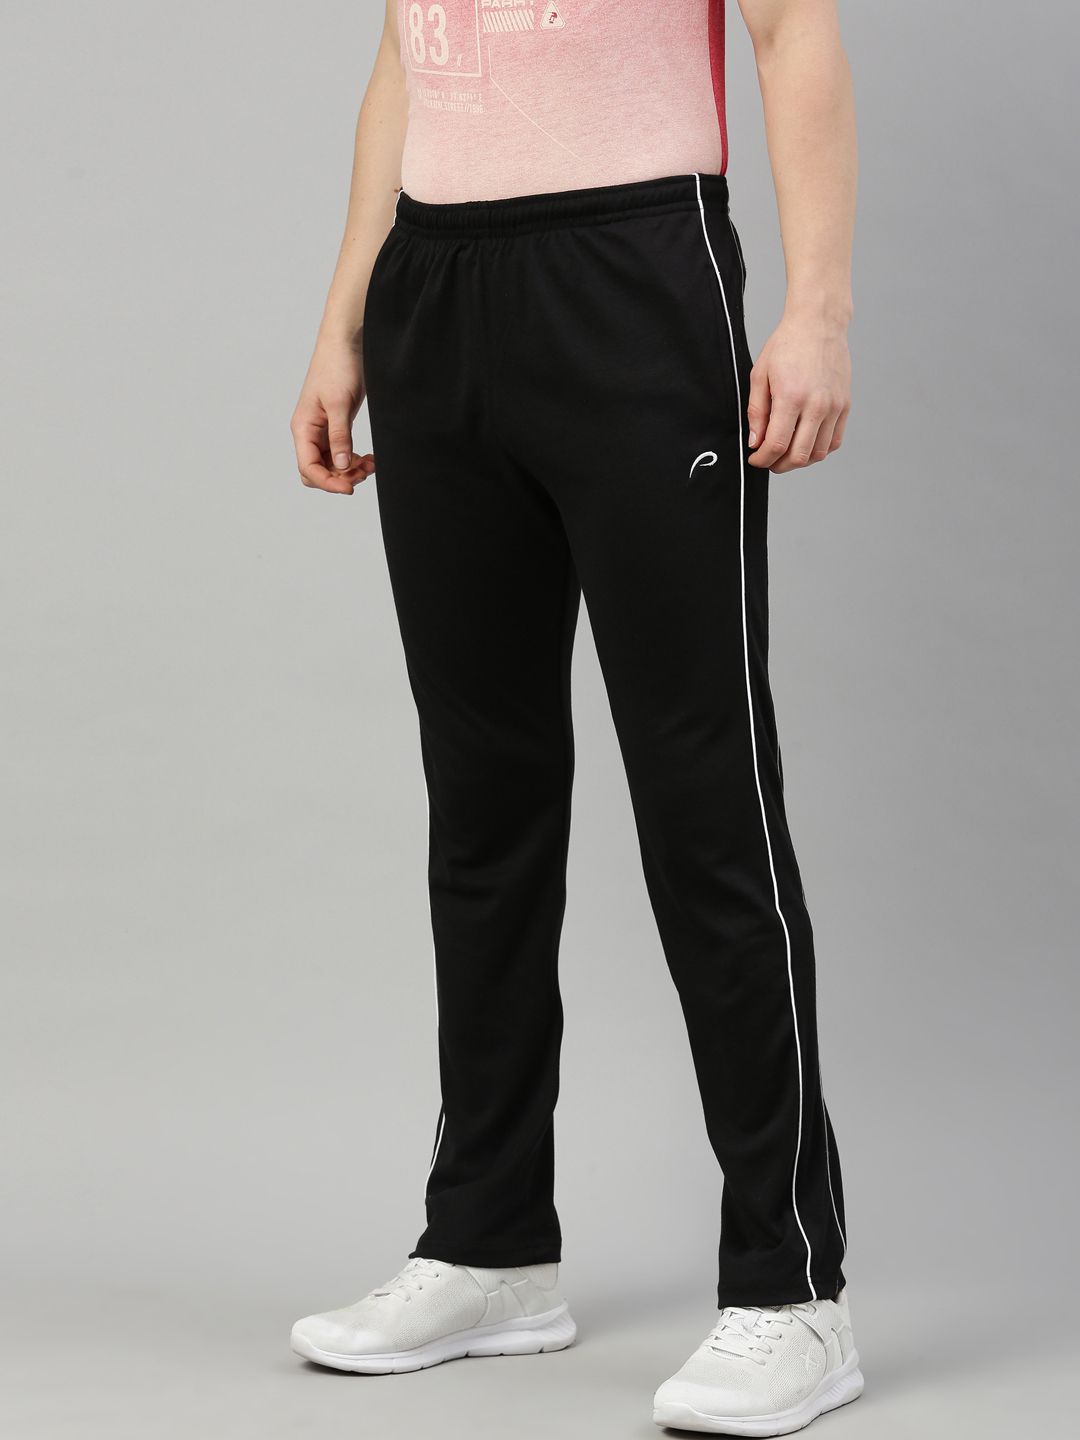 Buy Black Track Pants for Men by PROLINE Online | Slim fit joggers, Mens  pants, Black jeans